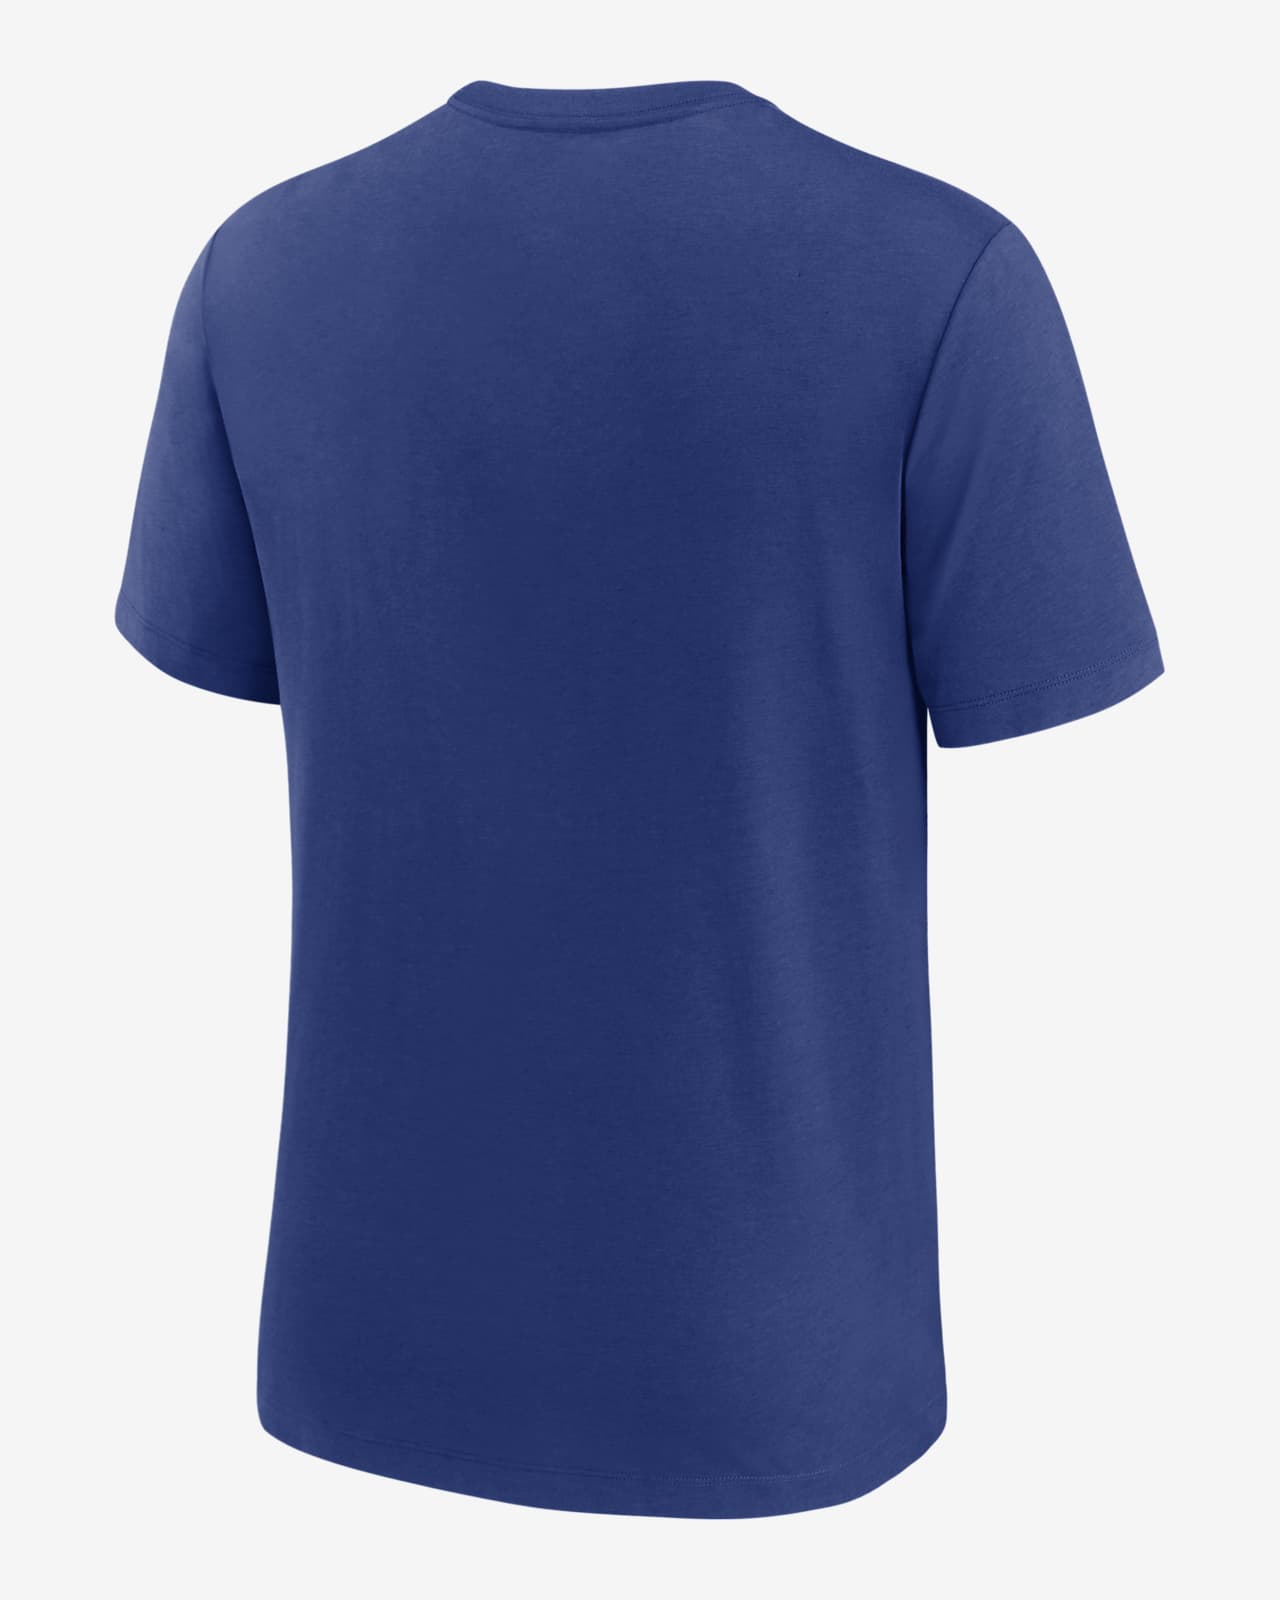 Nike Rewind Retro (MLB Seattle Mariners) Men's T-Shirt